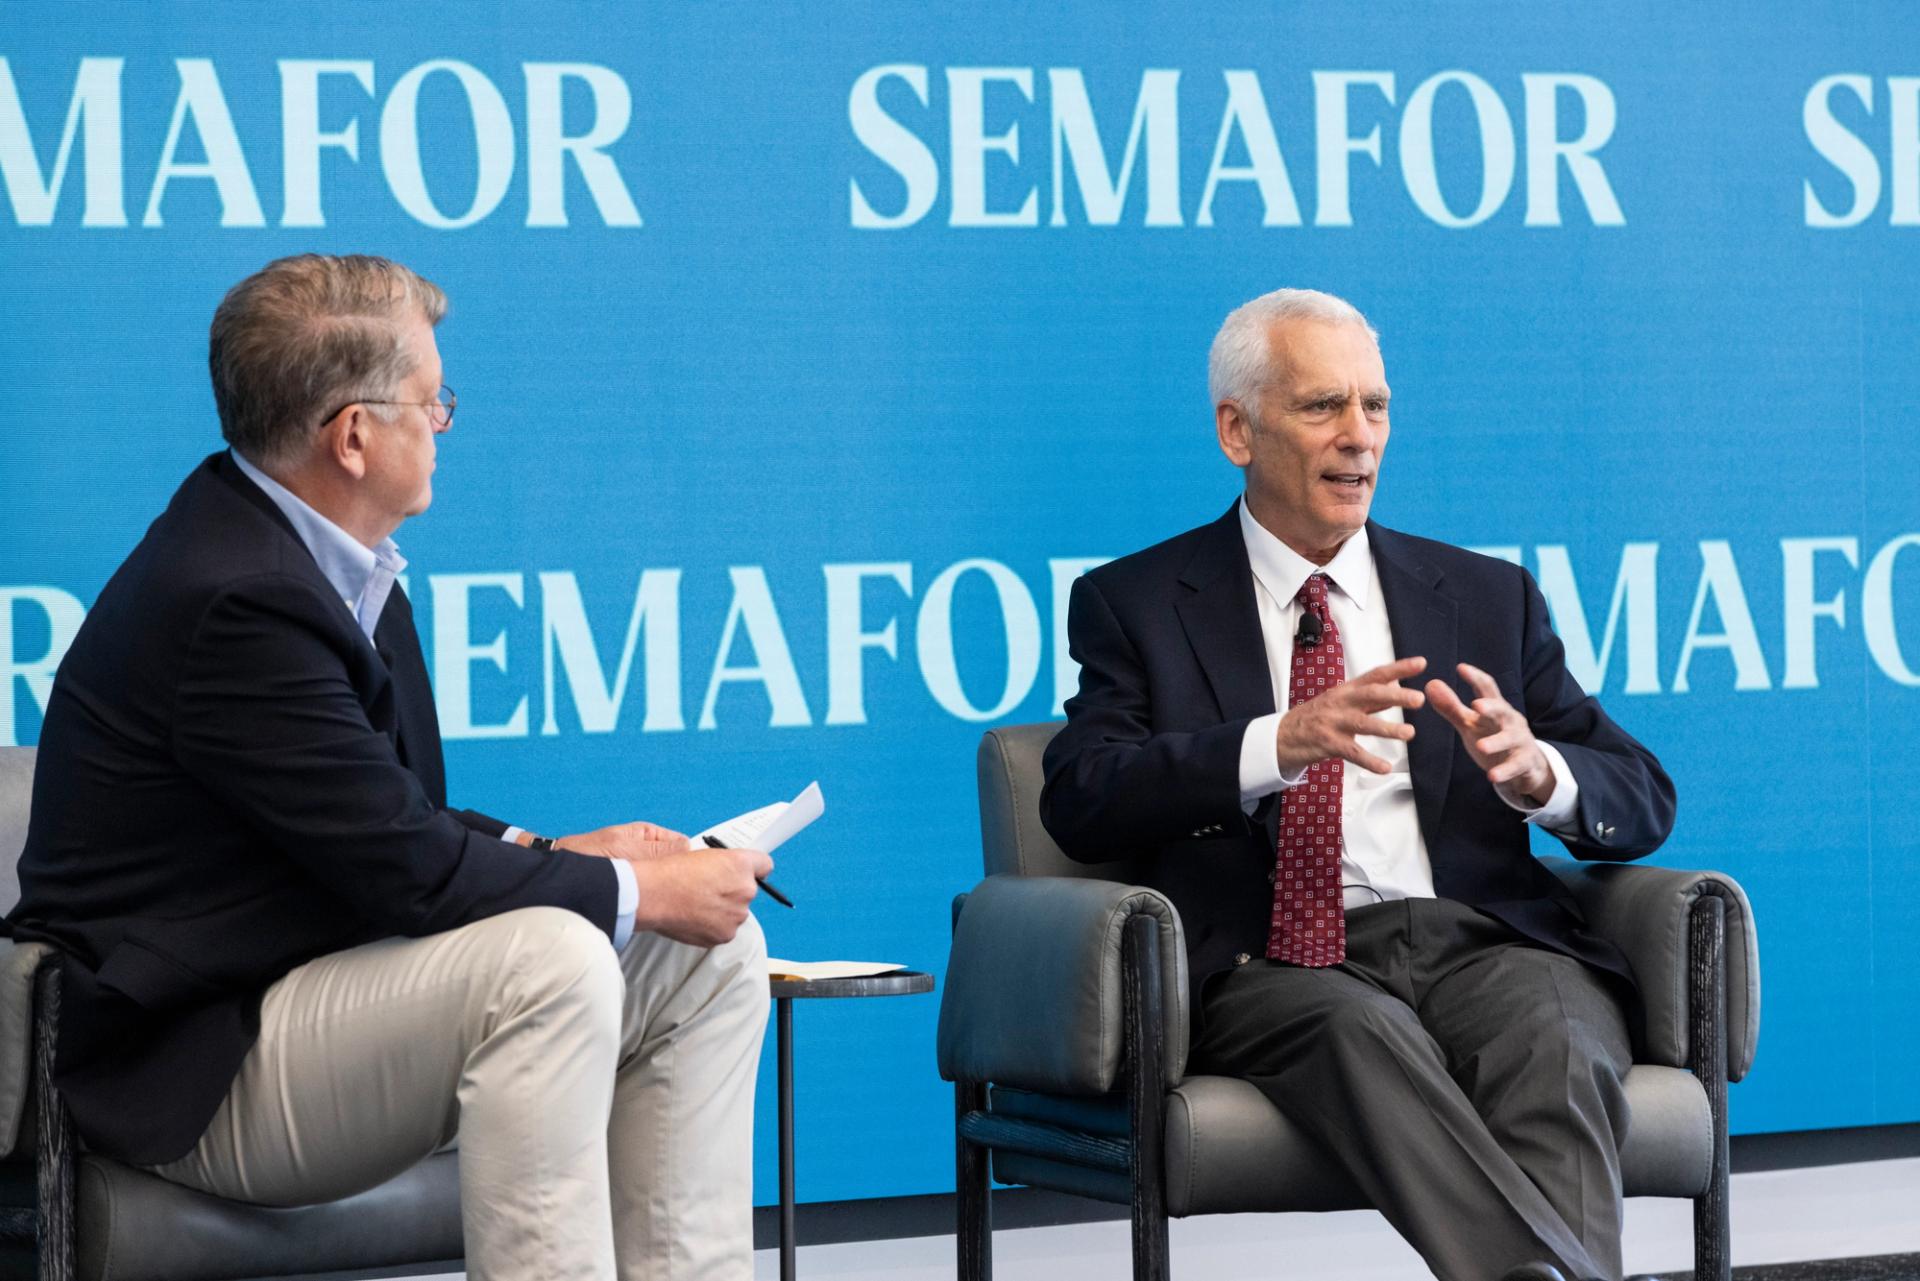 Semafor editor-at-large Steven Clemons speaks to White House Council of Economic Advisors Chair Jared Bernstein